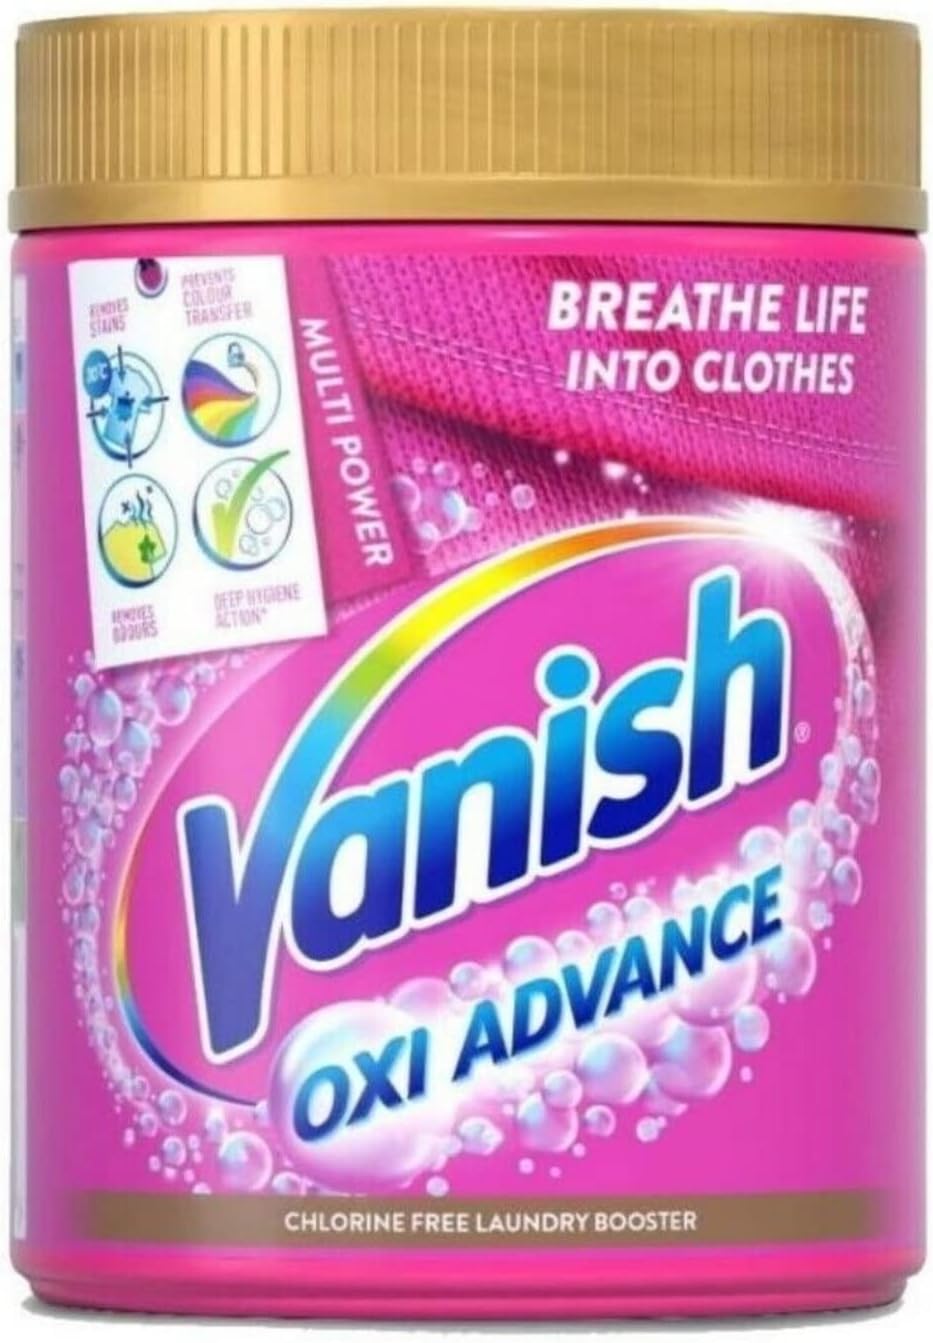 Vanish Oxi Action 470g Powder Laundry Detergent : Health & Household